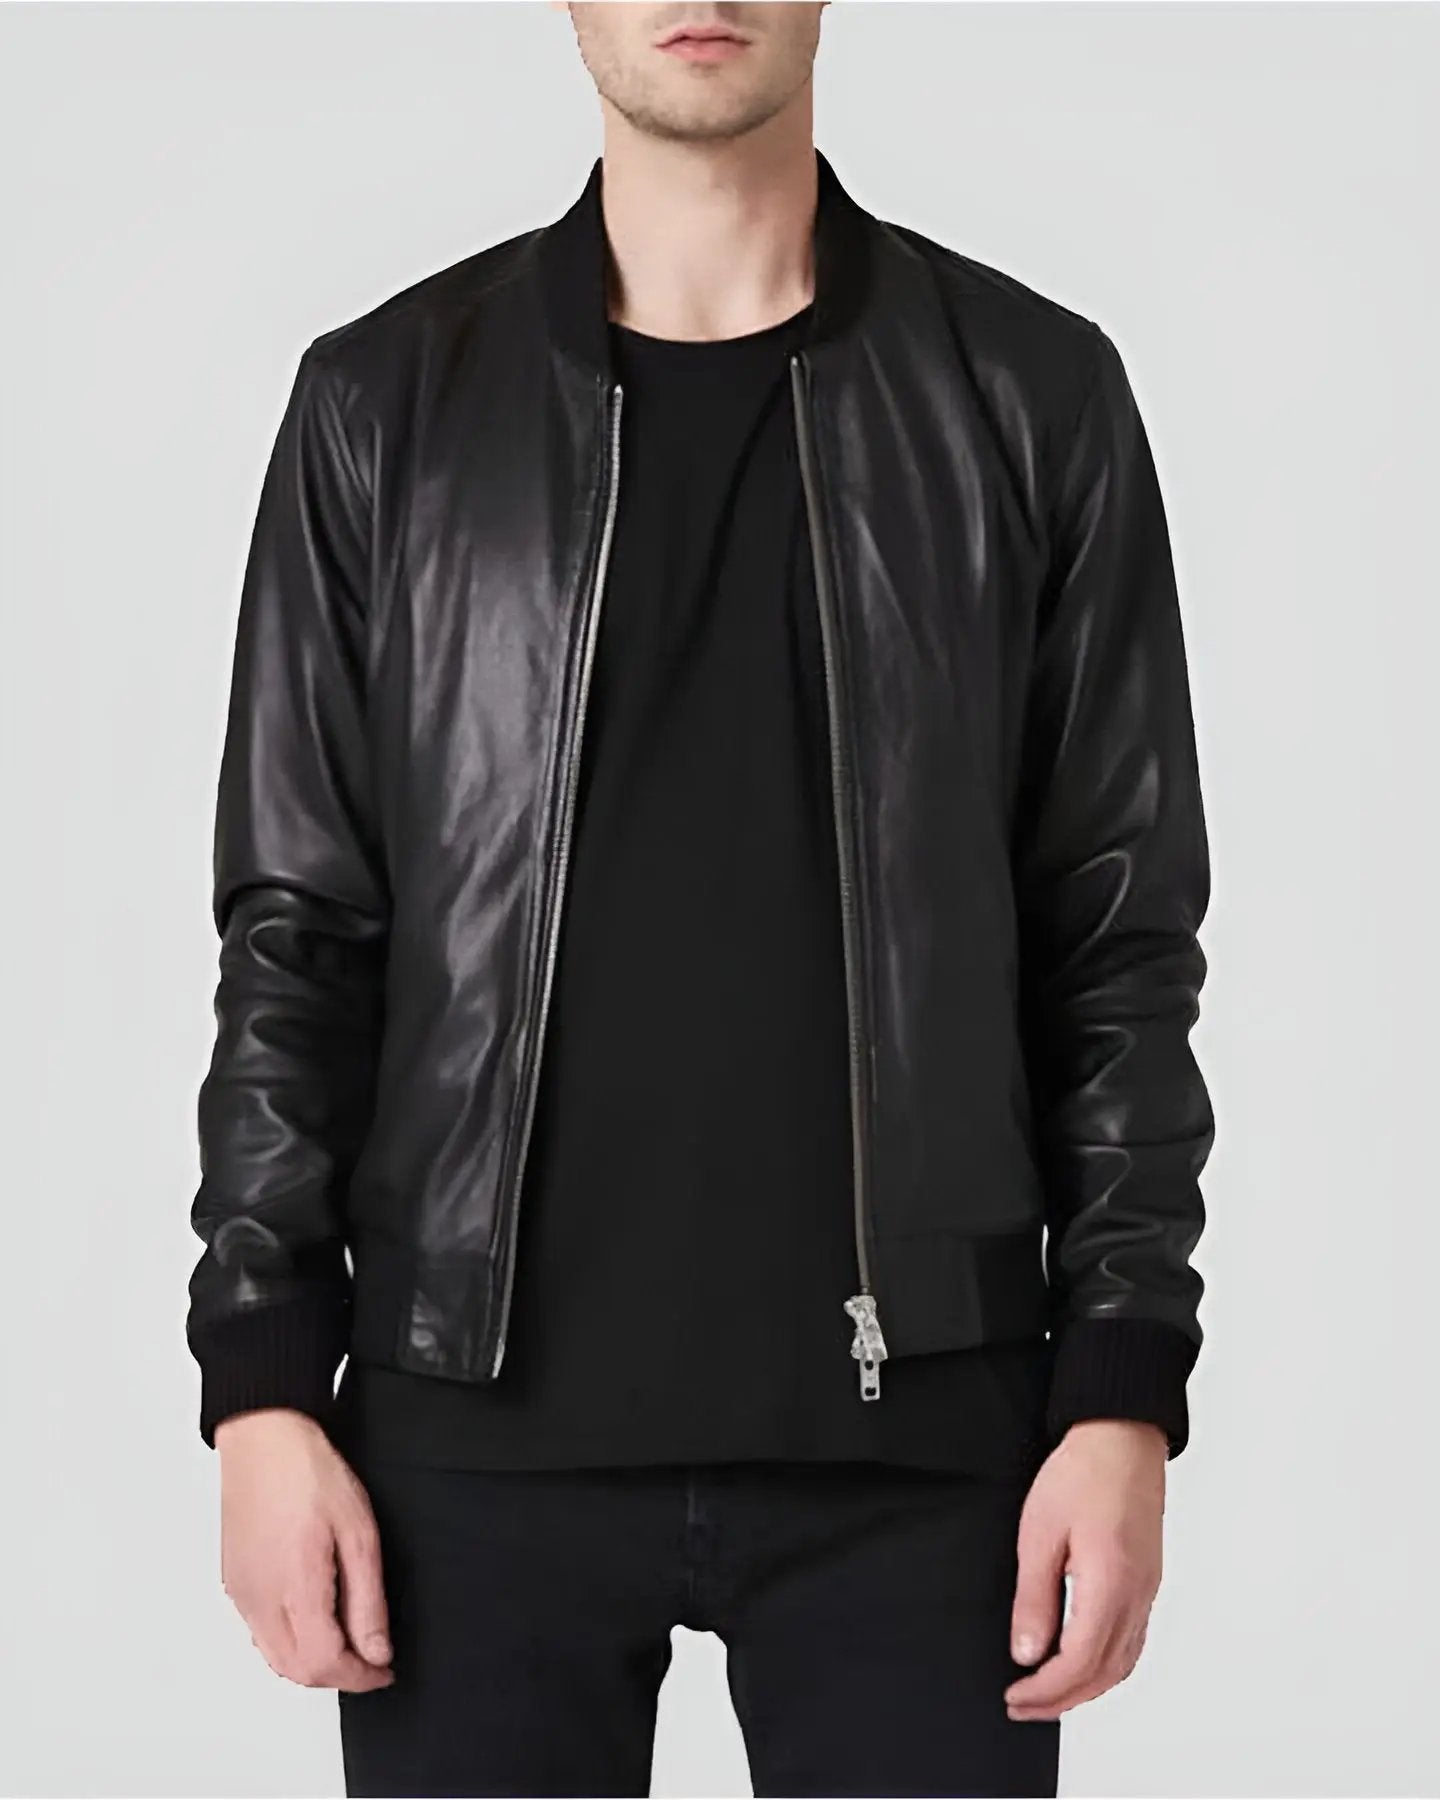 Men Kyros Black Bomber Leather Jacket, Large - Men's Leather Jackets - 100% Real Leather - NYC Leather Jackets